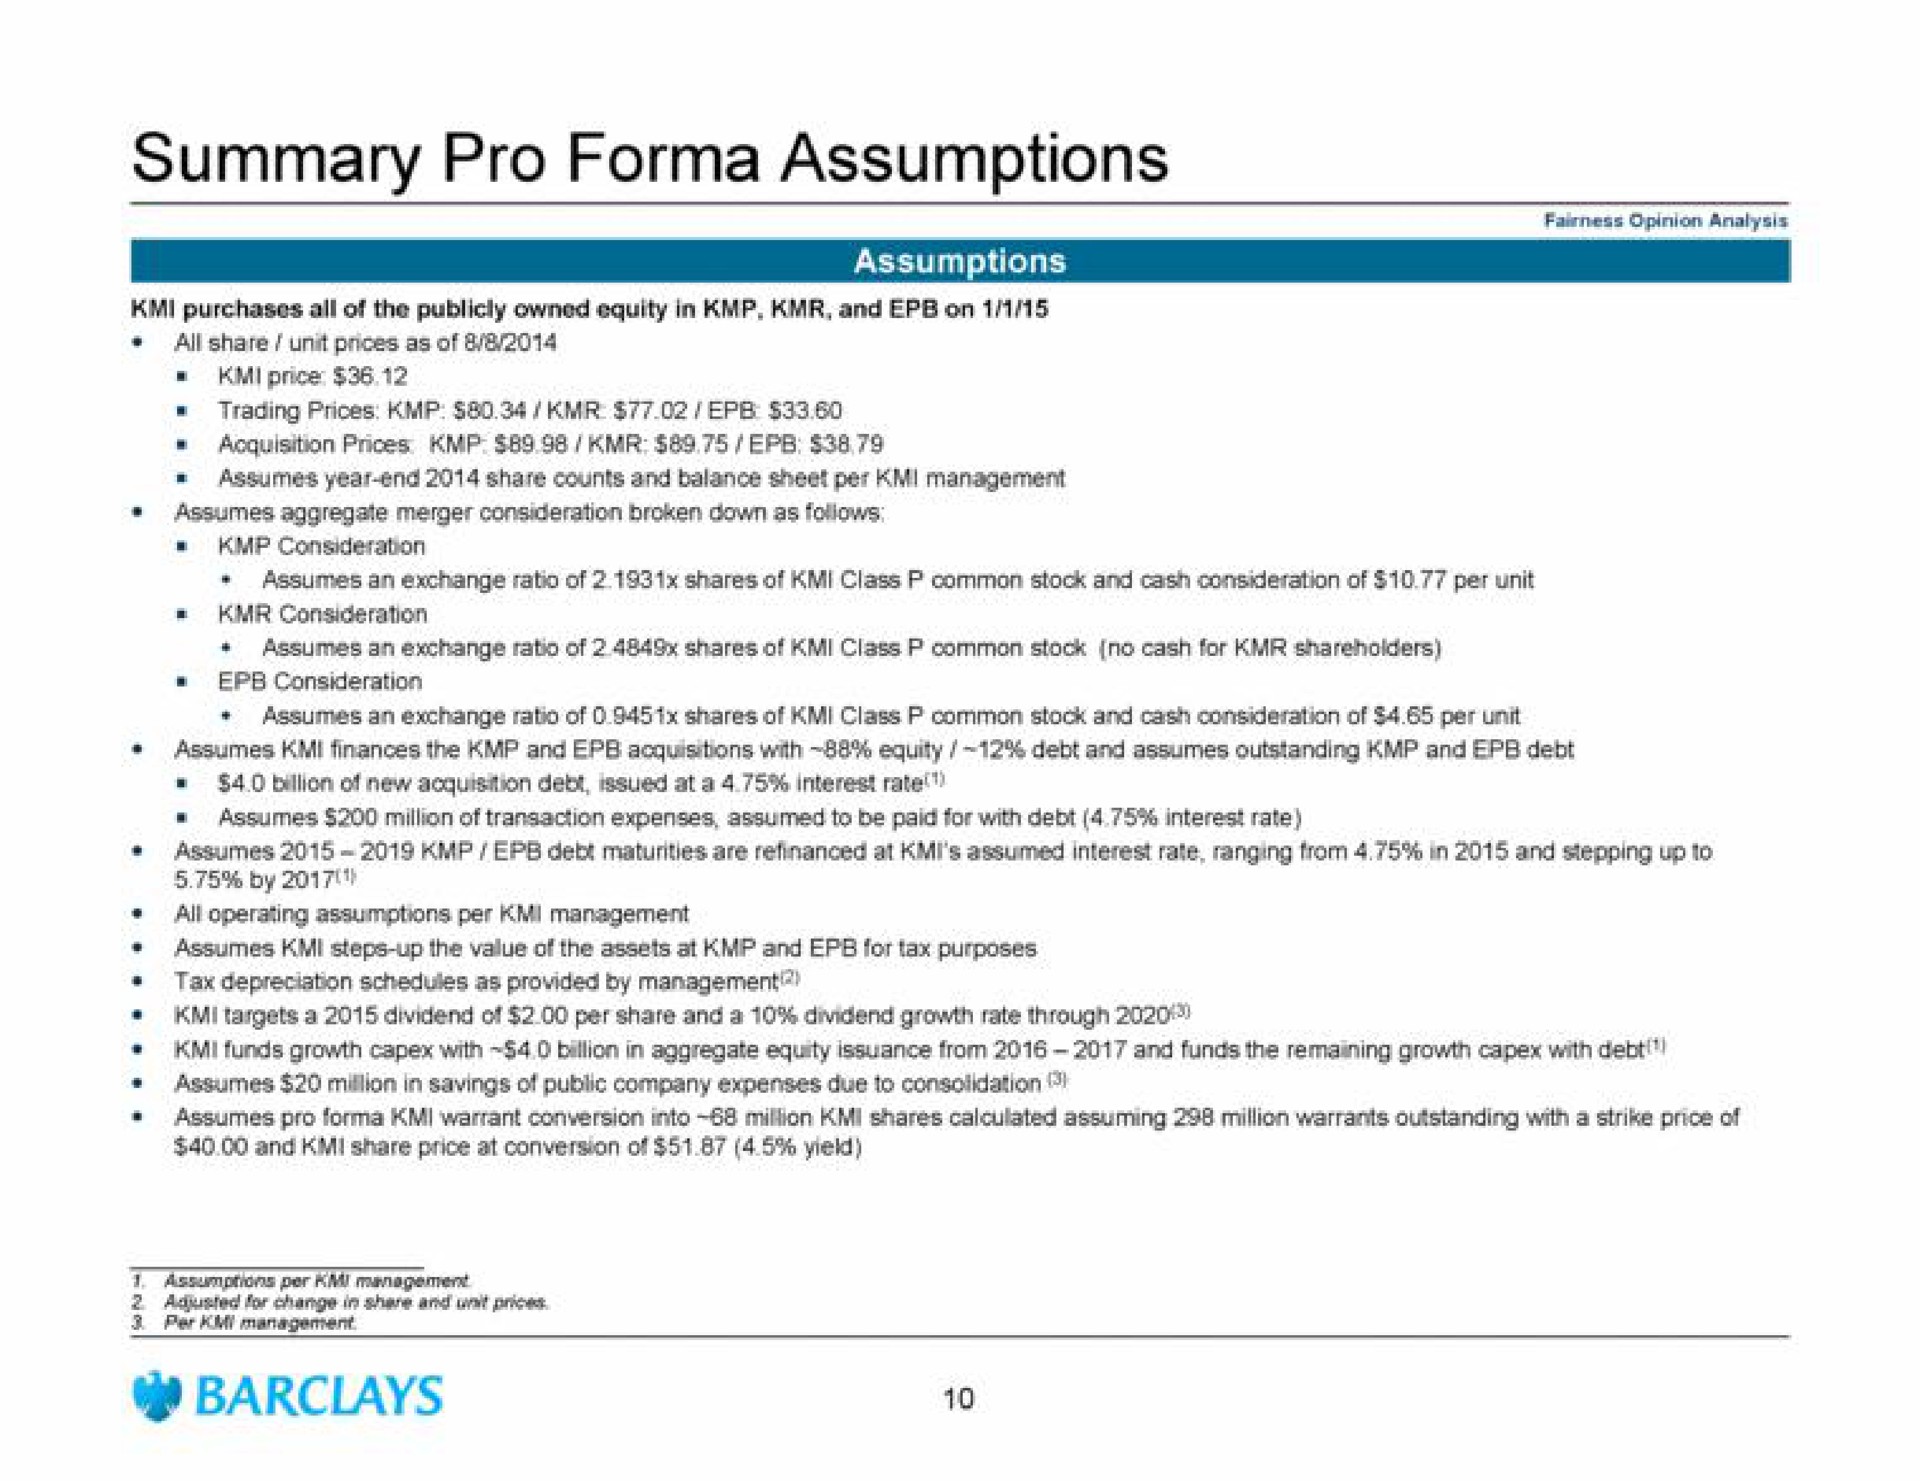 summary pro assumptions | Barclays